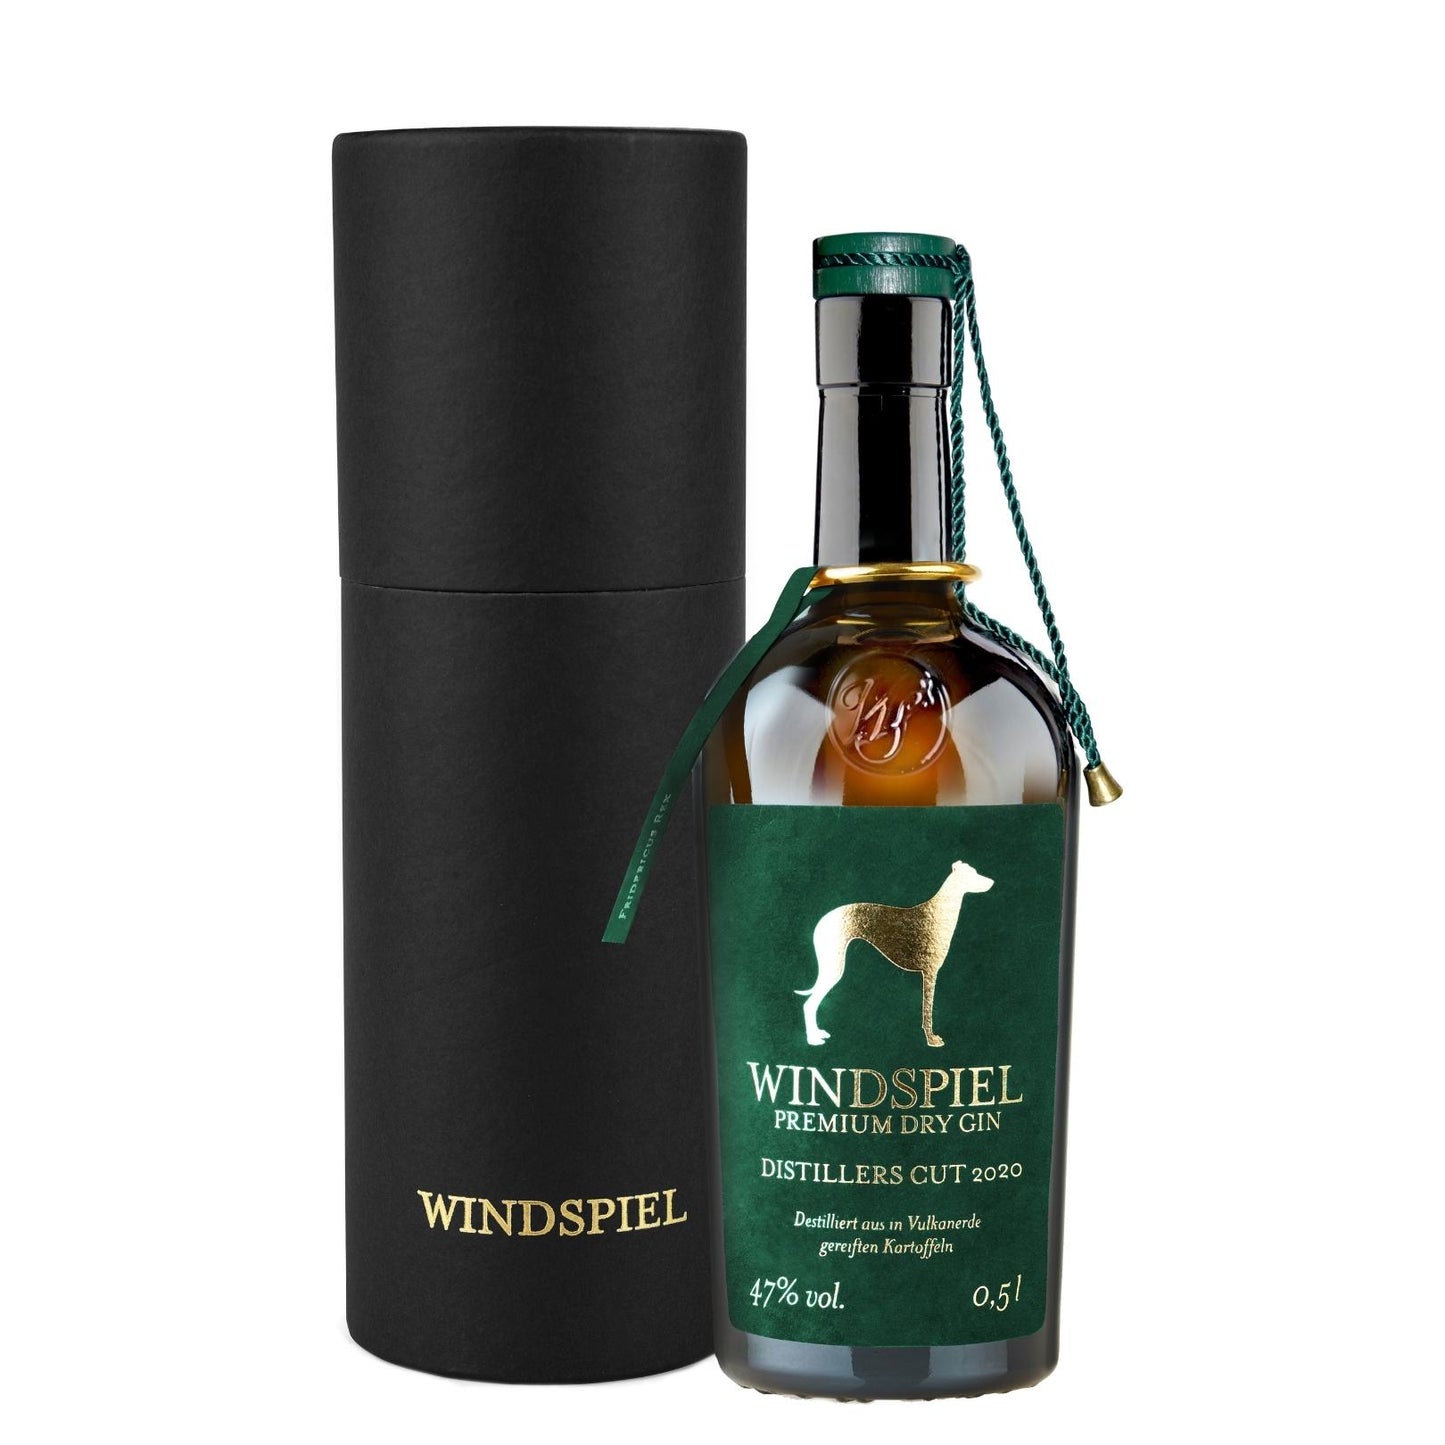 WiNDSPiEL Premium Dry Gin Distillers Cut 2020 47% vol. 0,5l